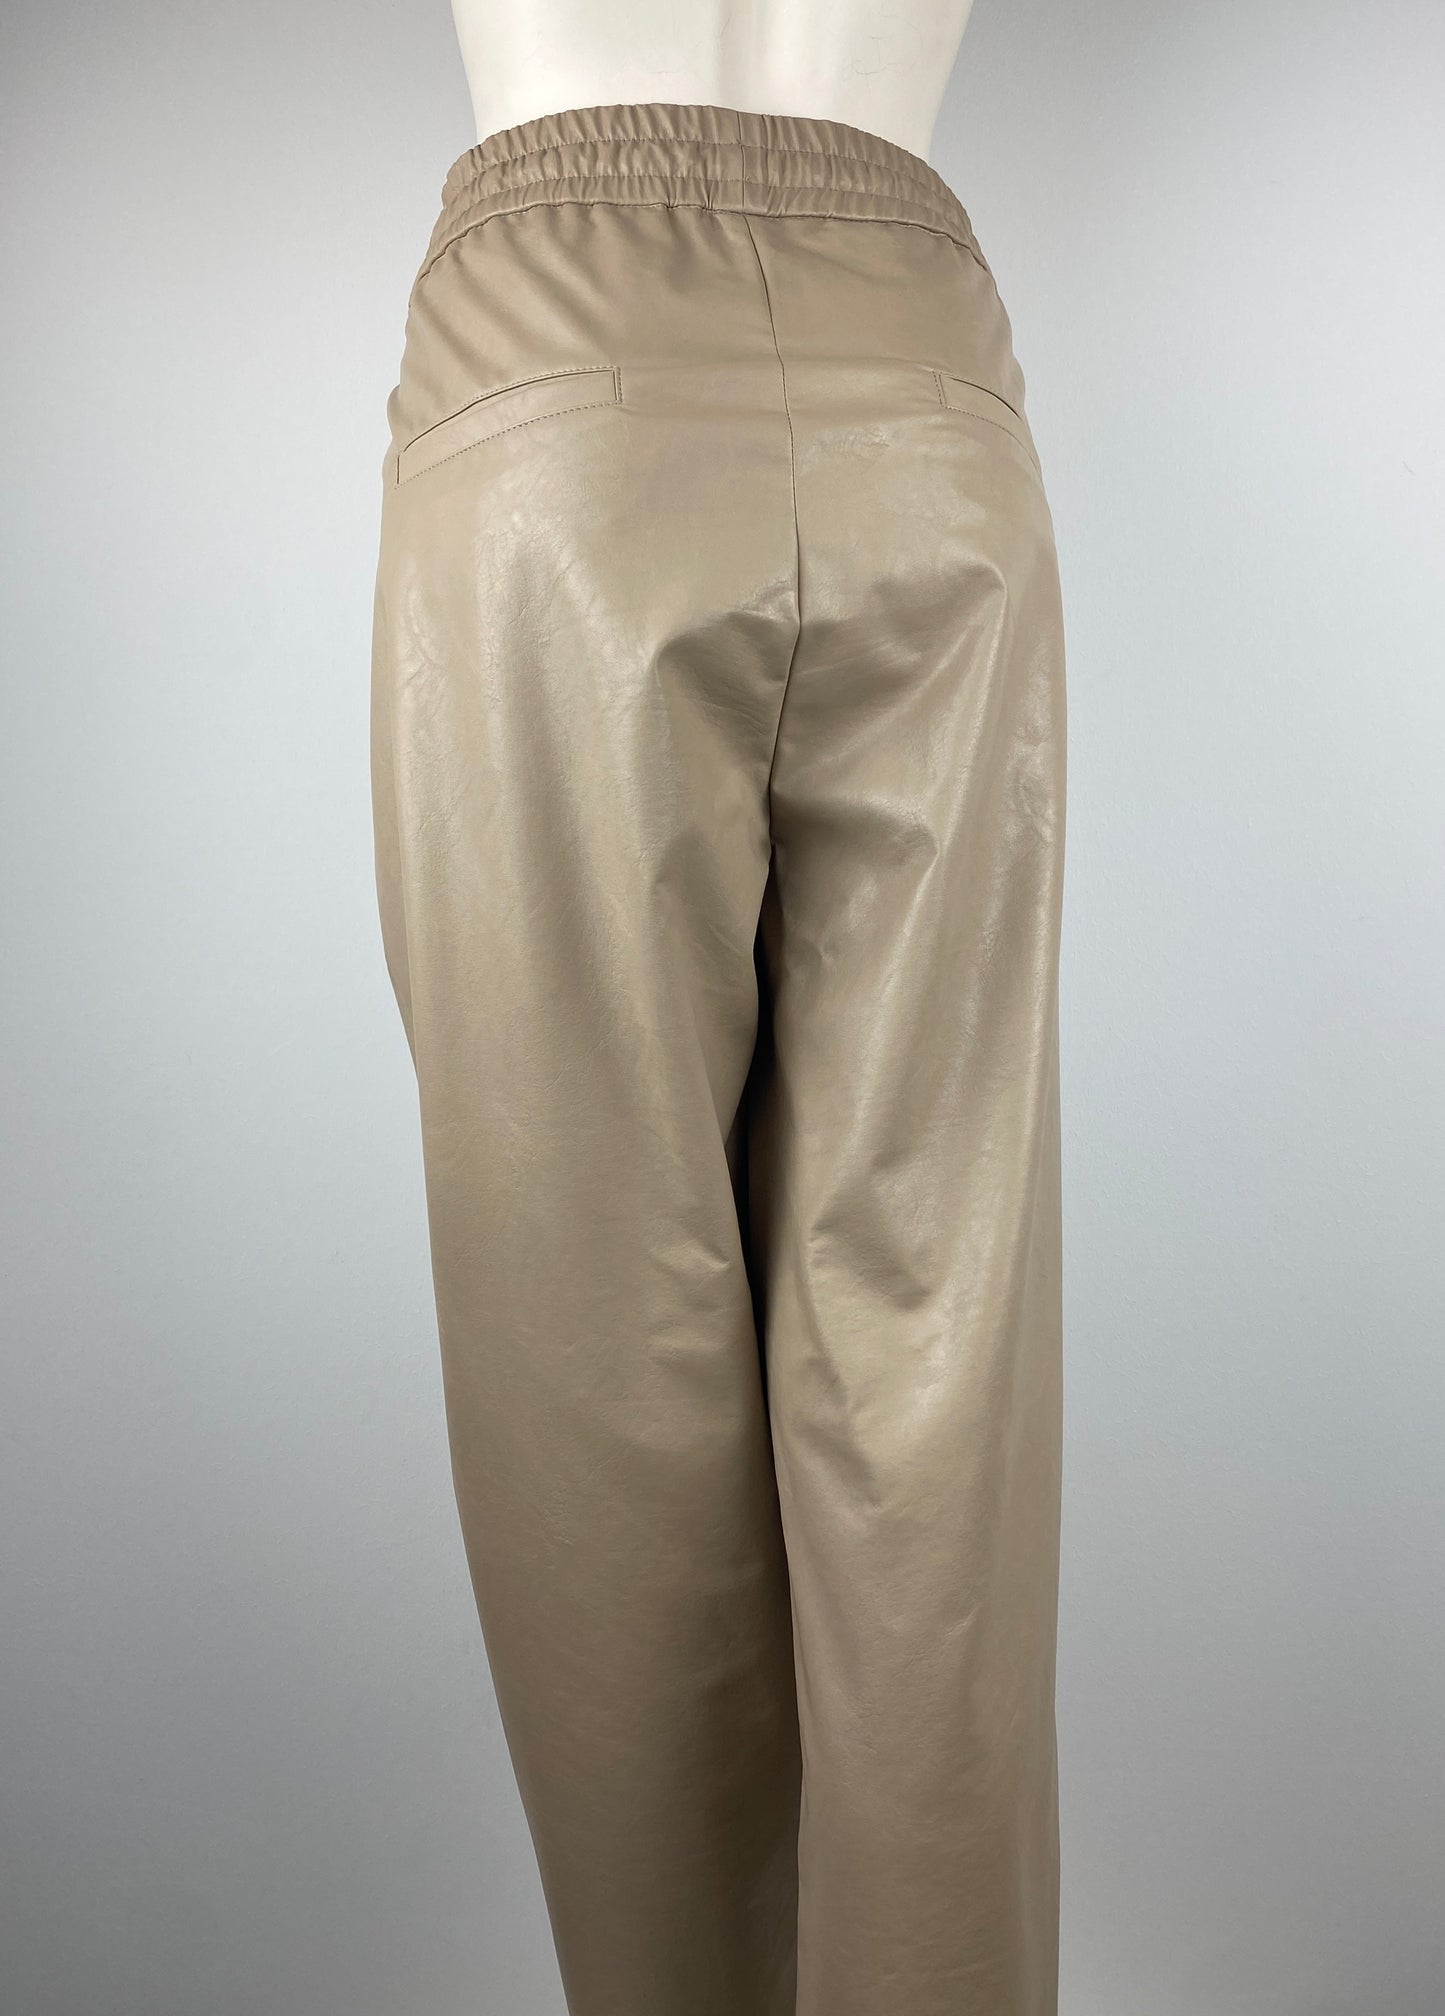 Beige faux leather pants from Raffaello Rossi